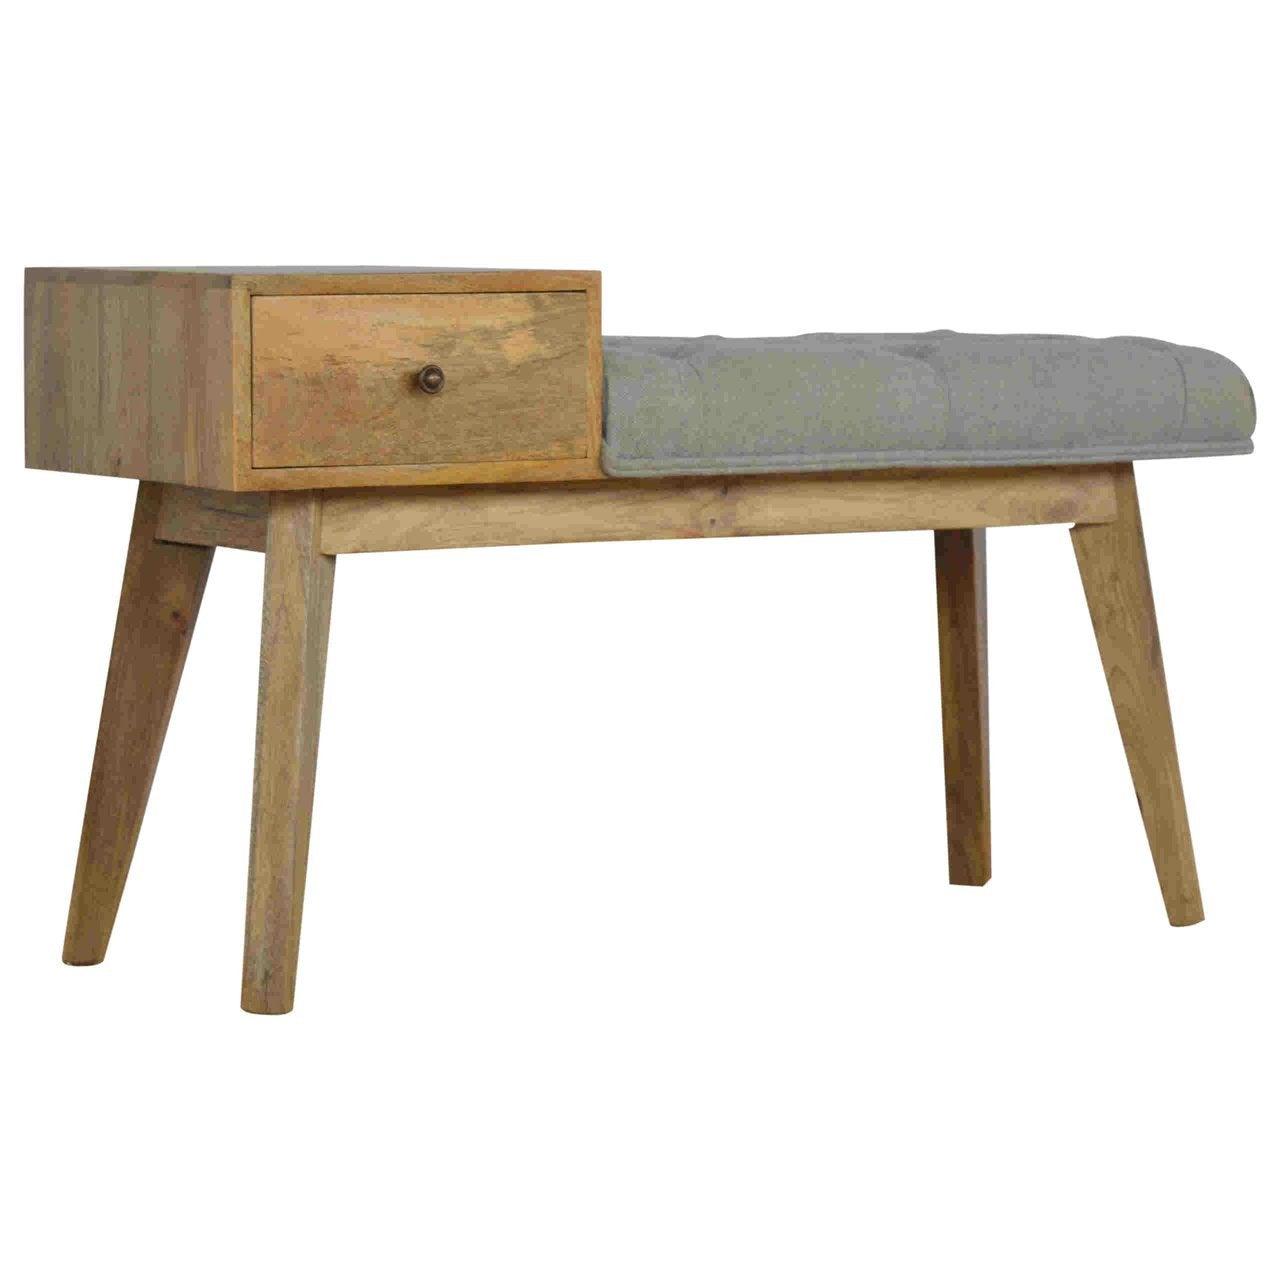 Grey tweed bench with 1 drawer - crimblefest furniture - image 4